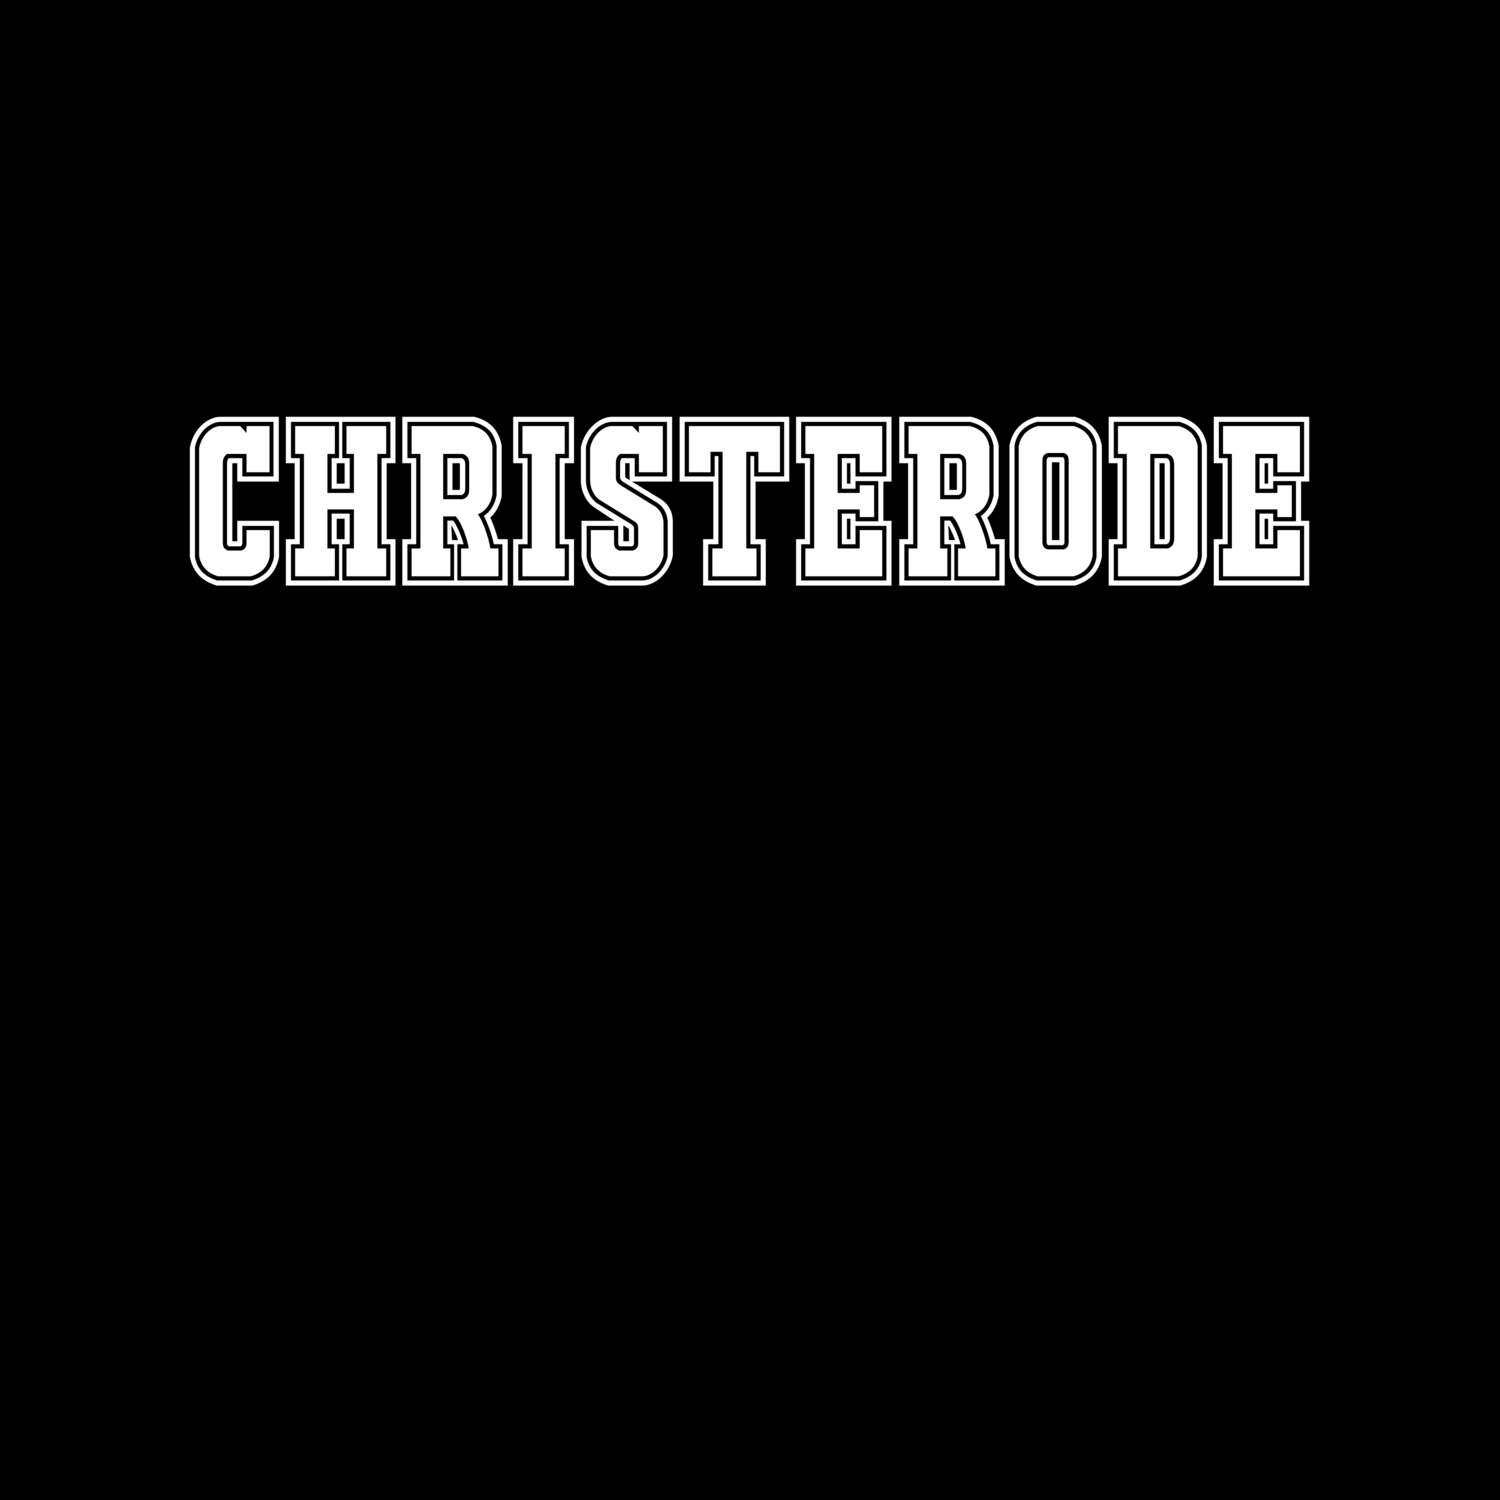 Christerode T-Shirt »Classic«